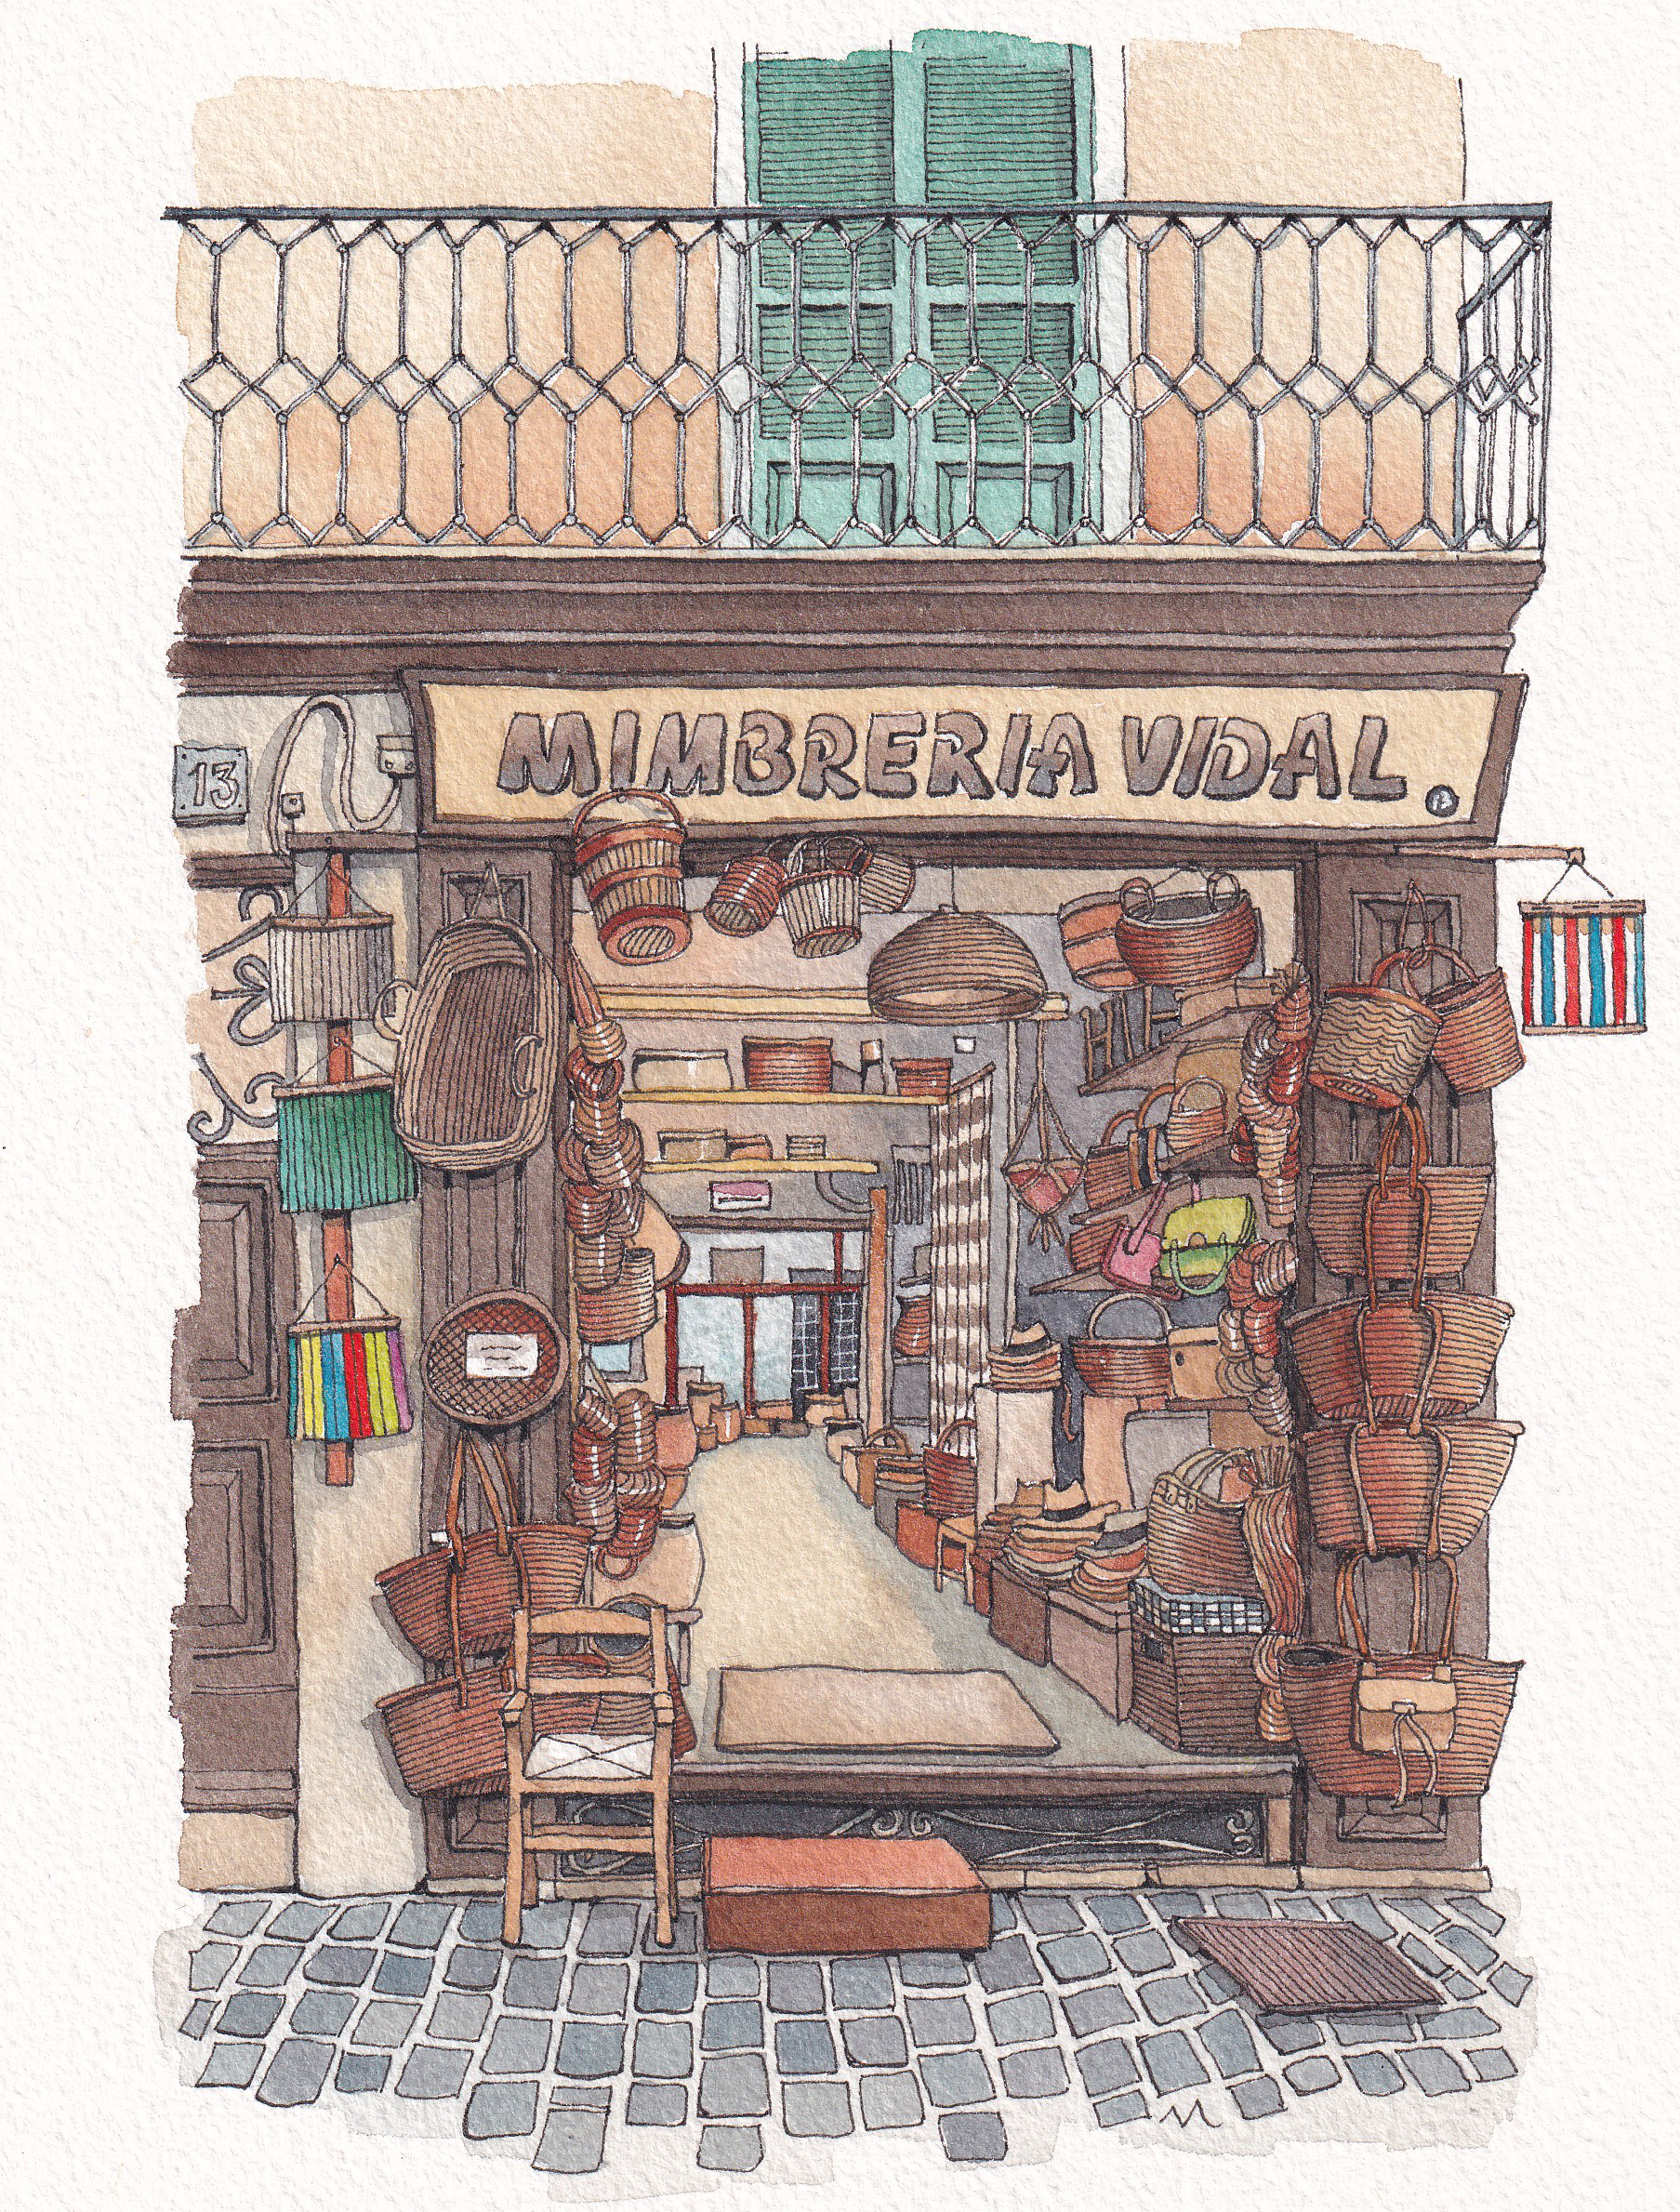 Wickerwork Shop Vidal